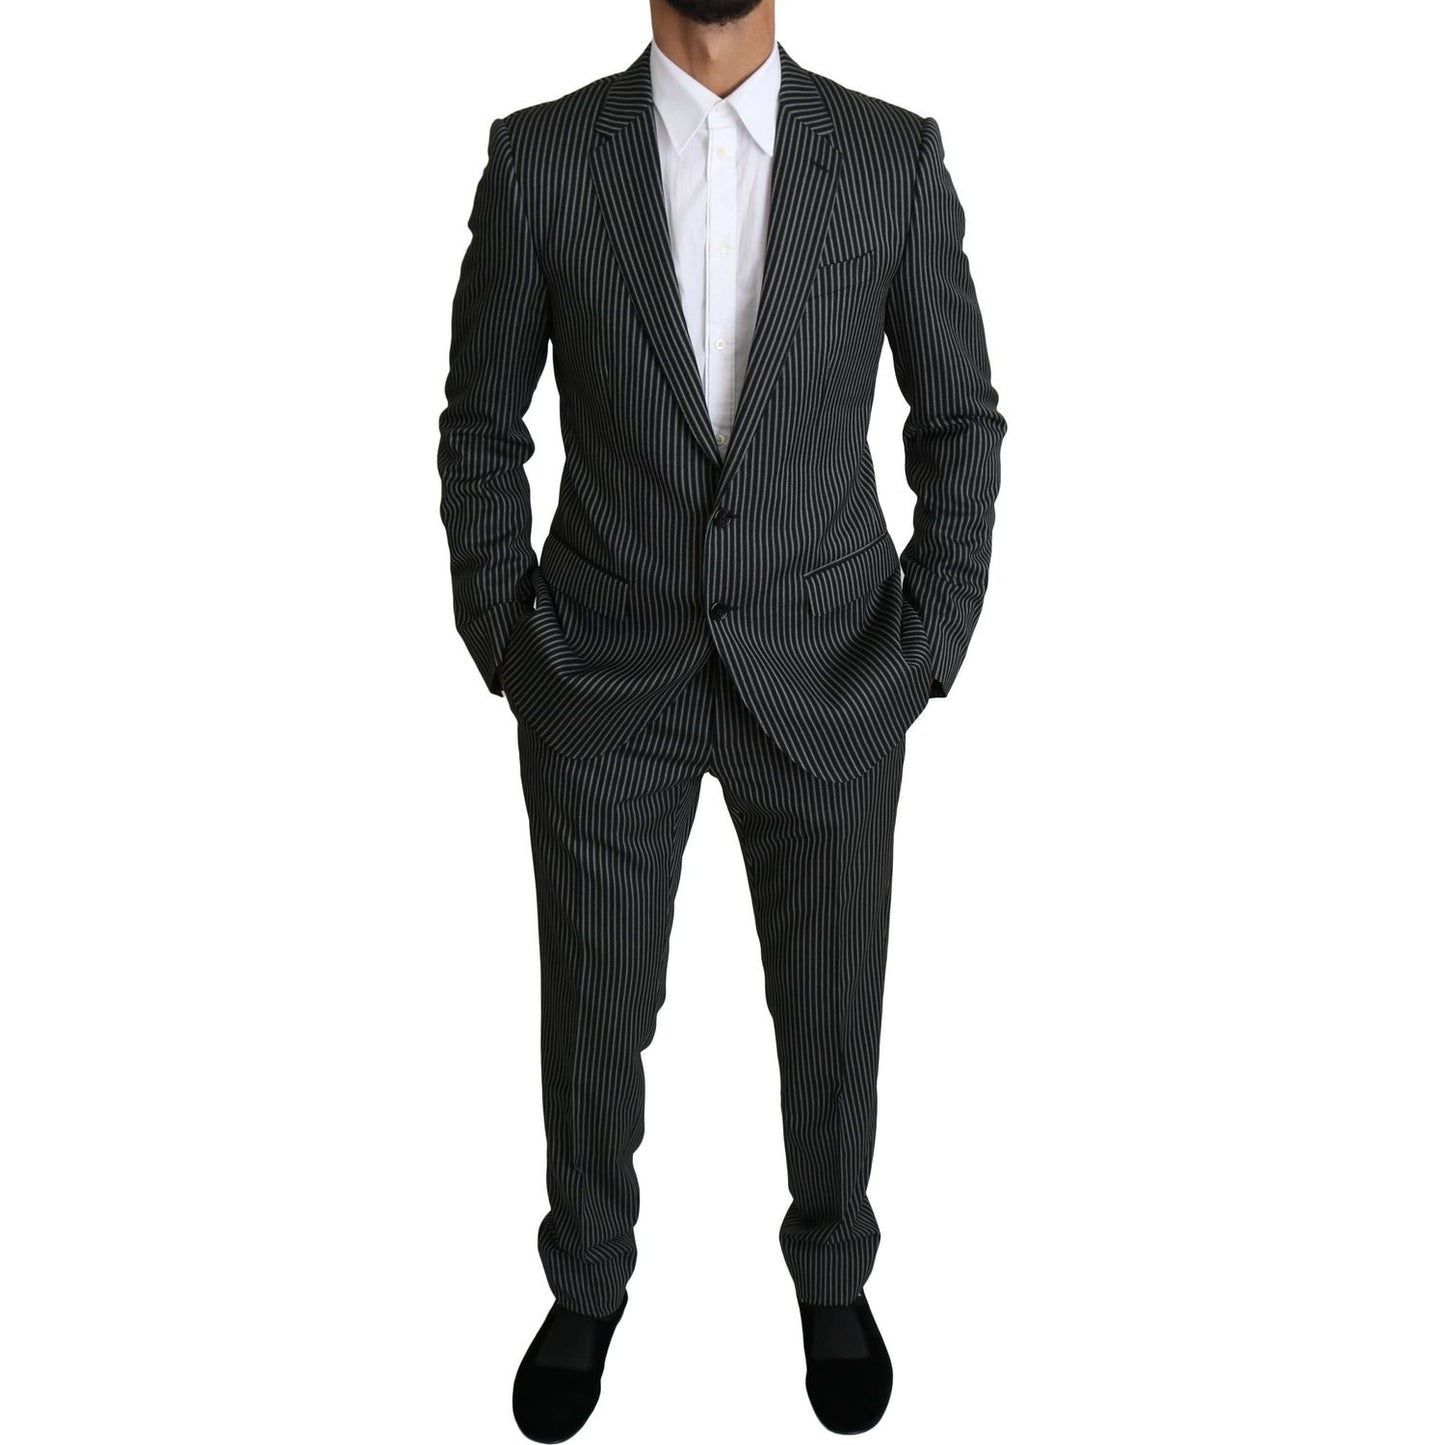 Dolce & Gabbana Elegant Striped Wool-Silk Two-Piece Suit black-white-stripes-2-piece-martini-suit Suit IMG_0371-2-scaled-2cc4fac7-1ba.jpg